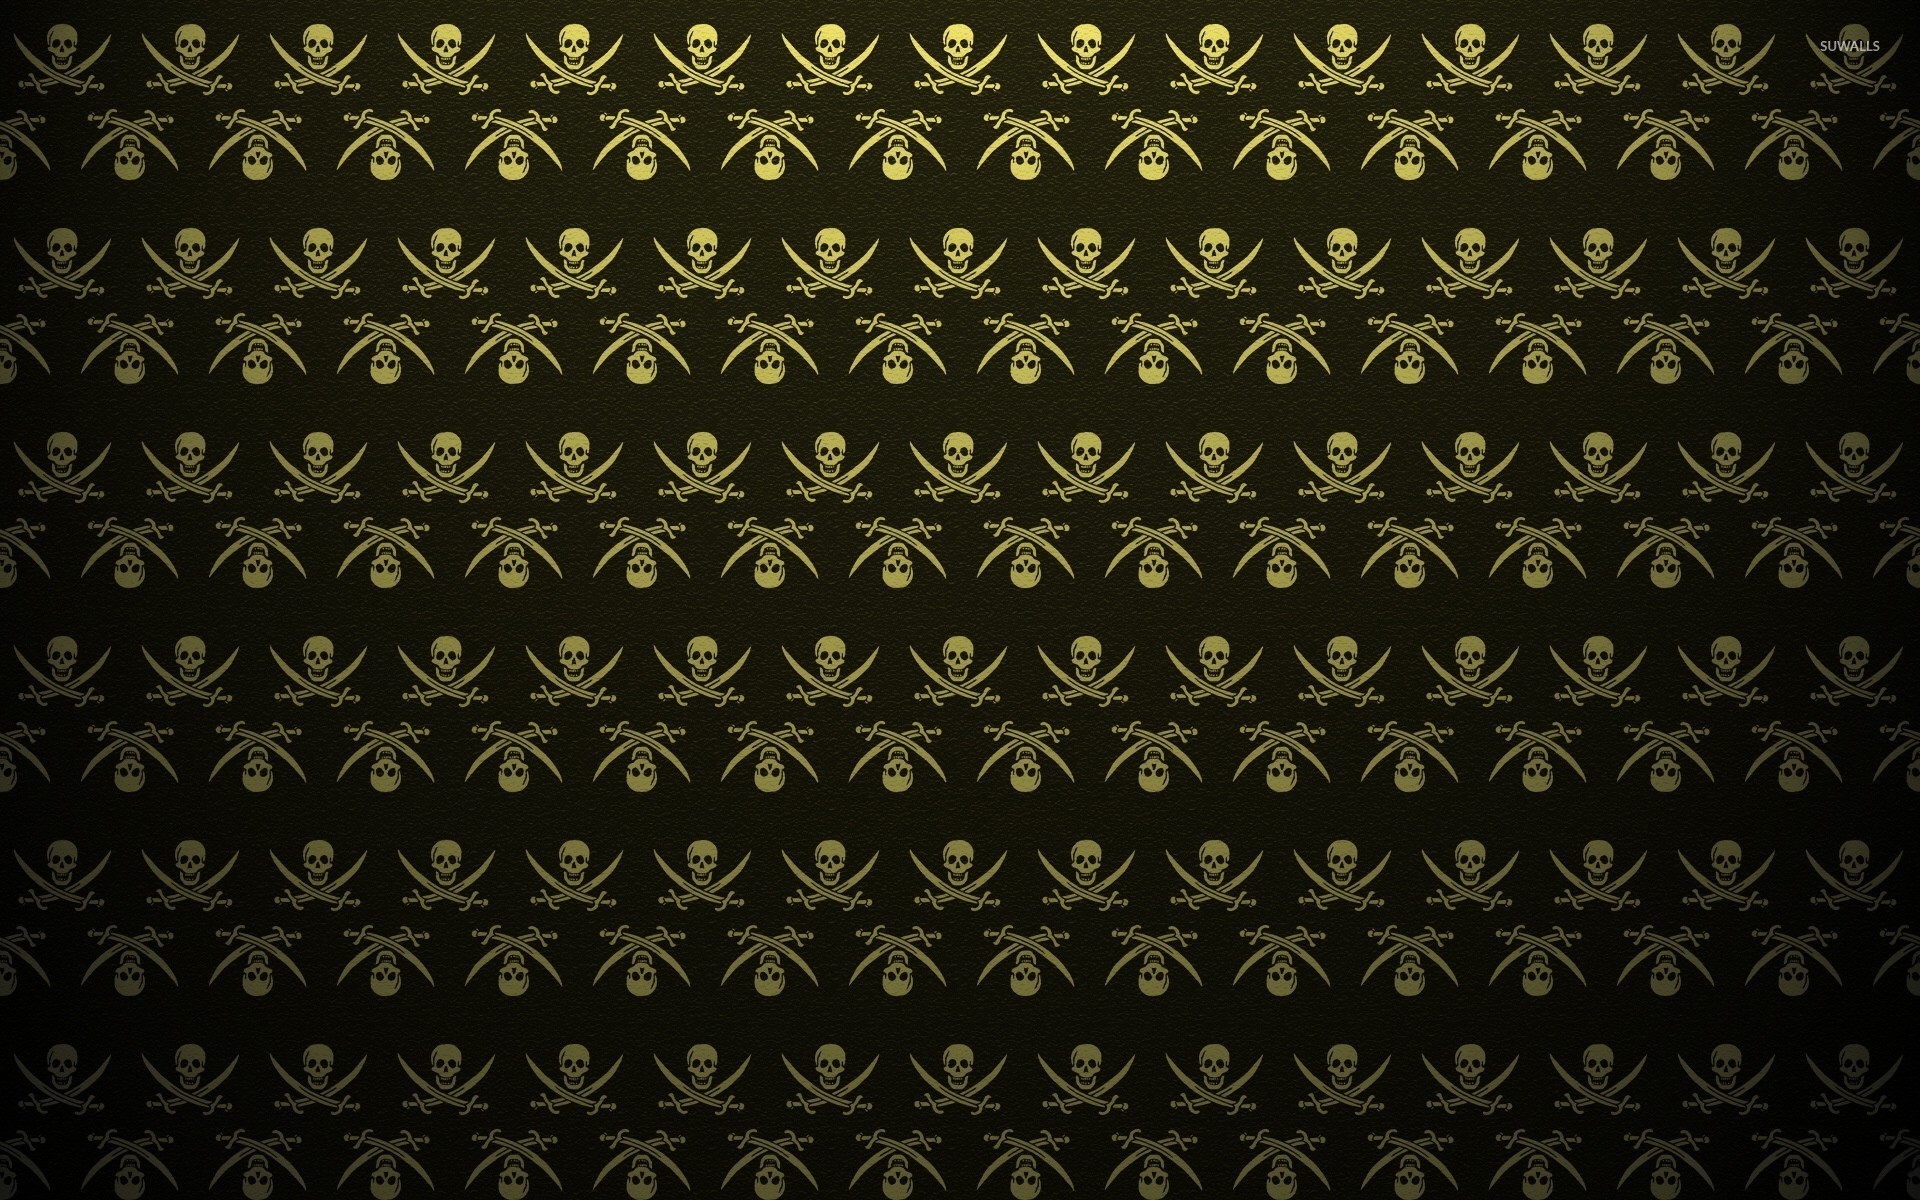 1920x1200 Pirate flag pattern wallpaper  jpg